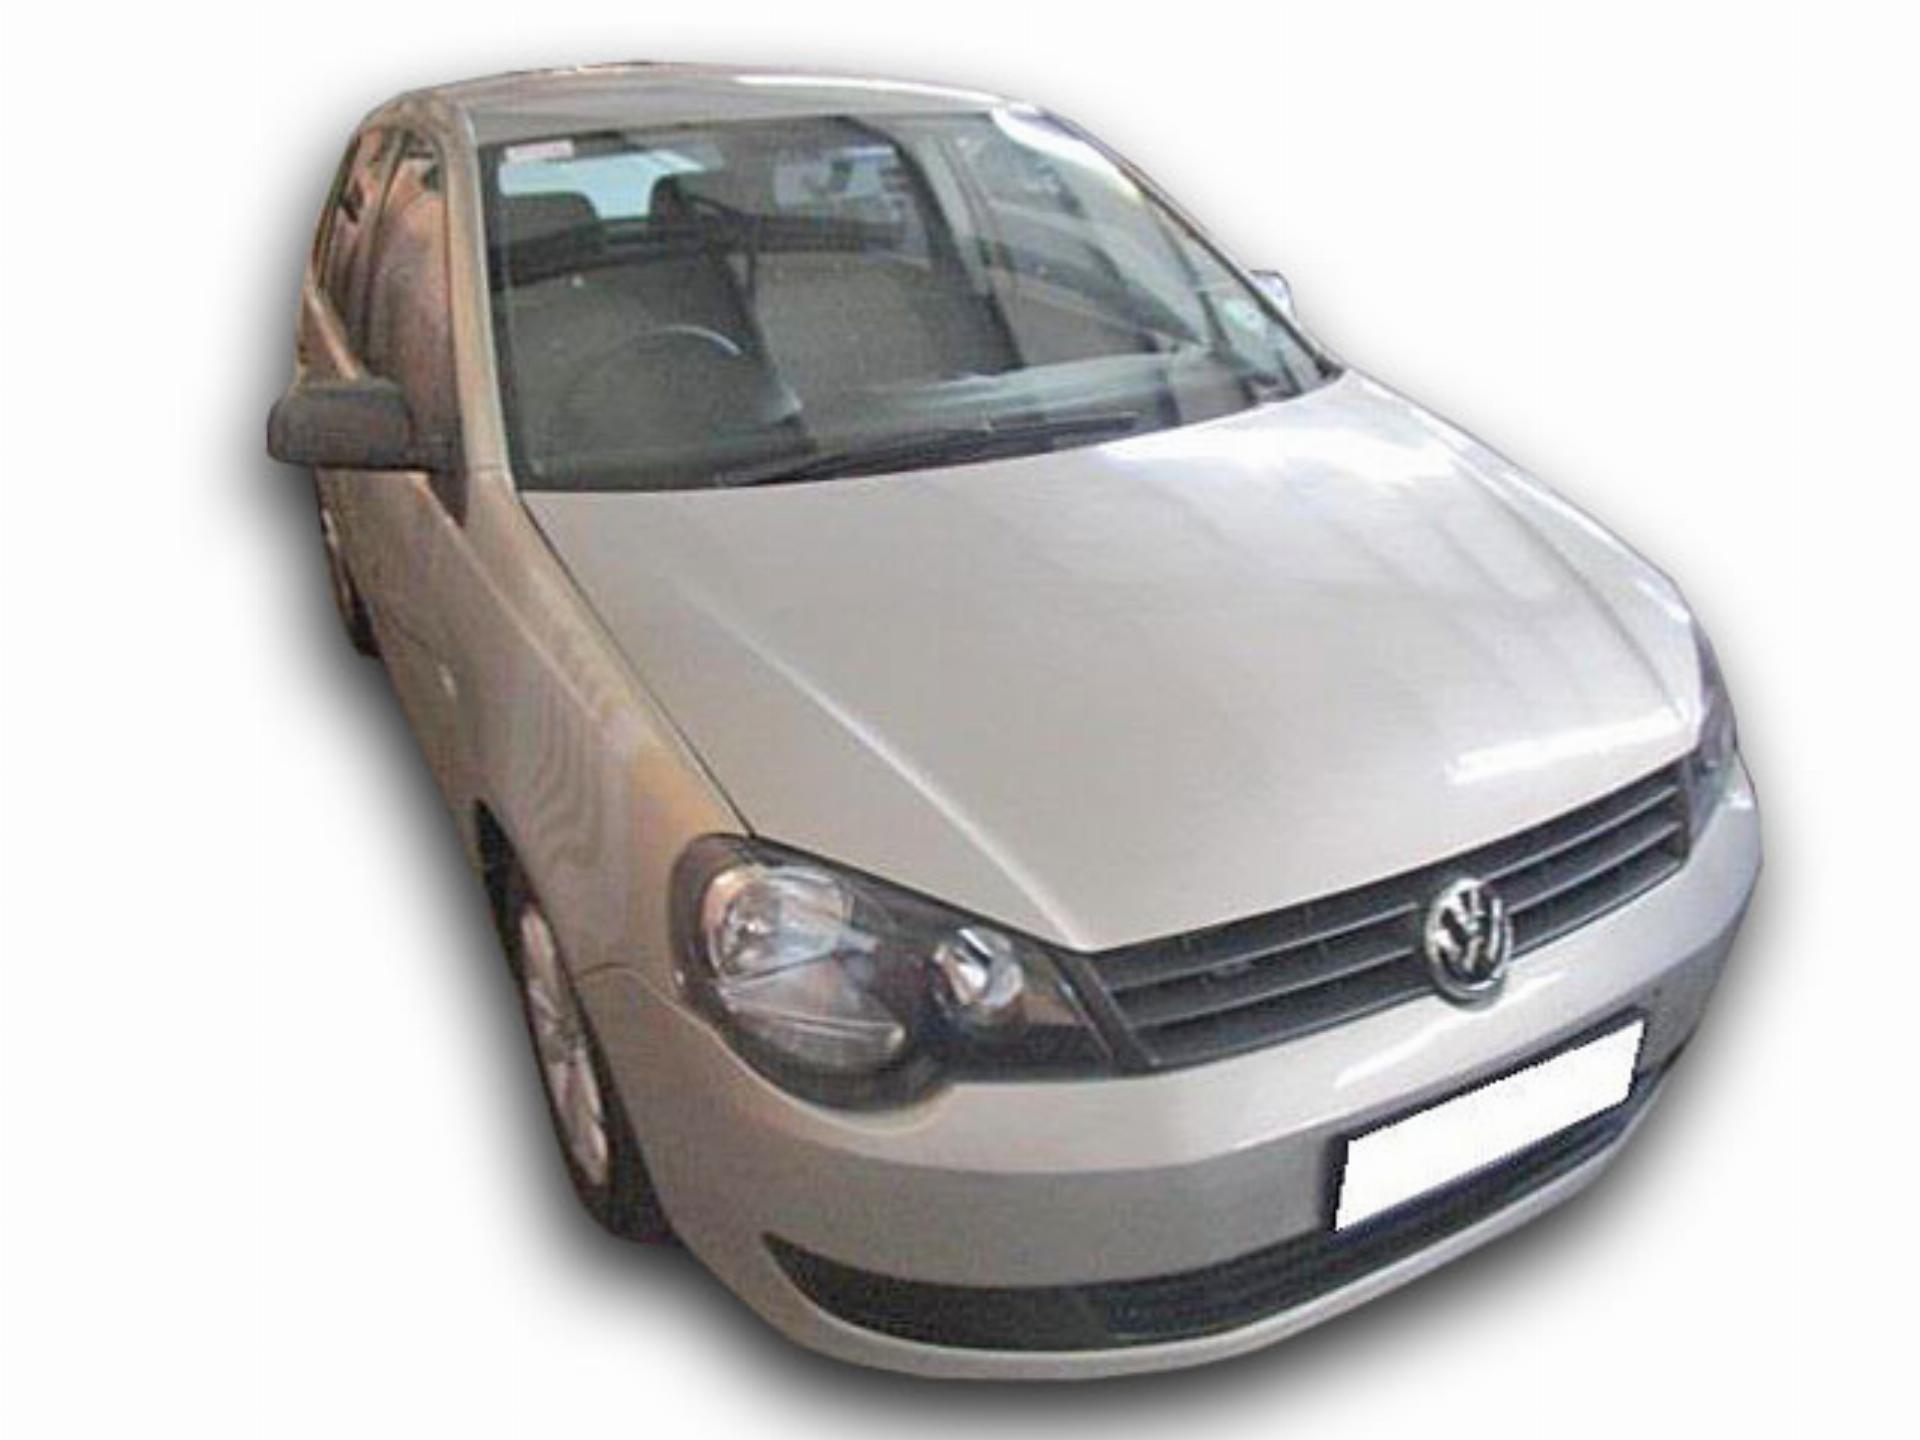 Volkswagen Polo Vivo 1.6 Trendline